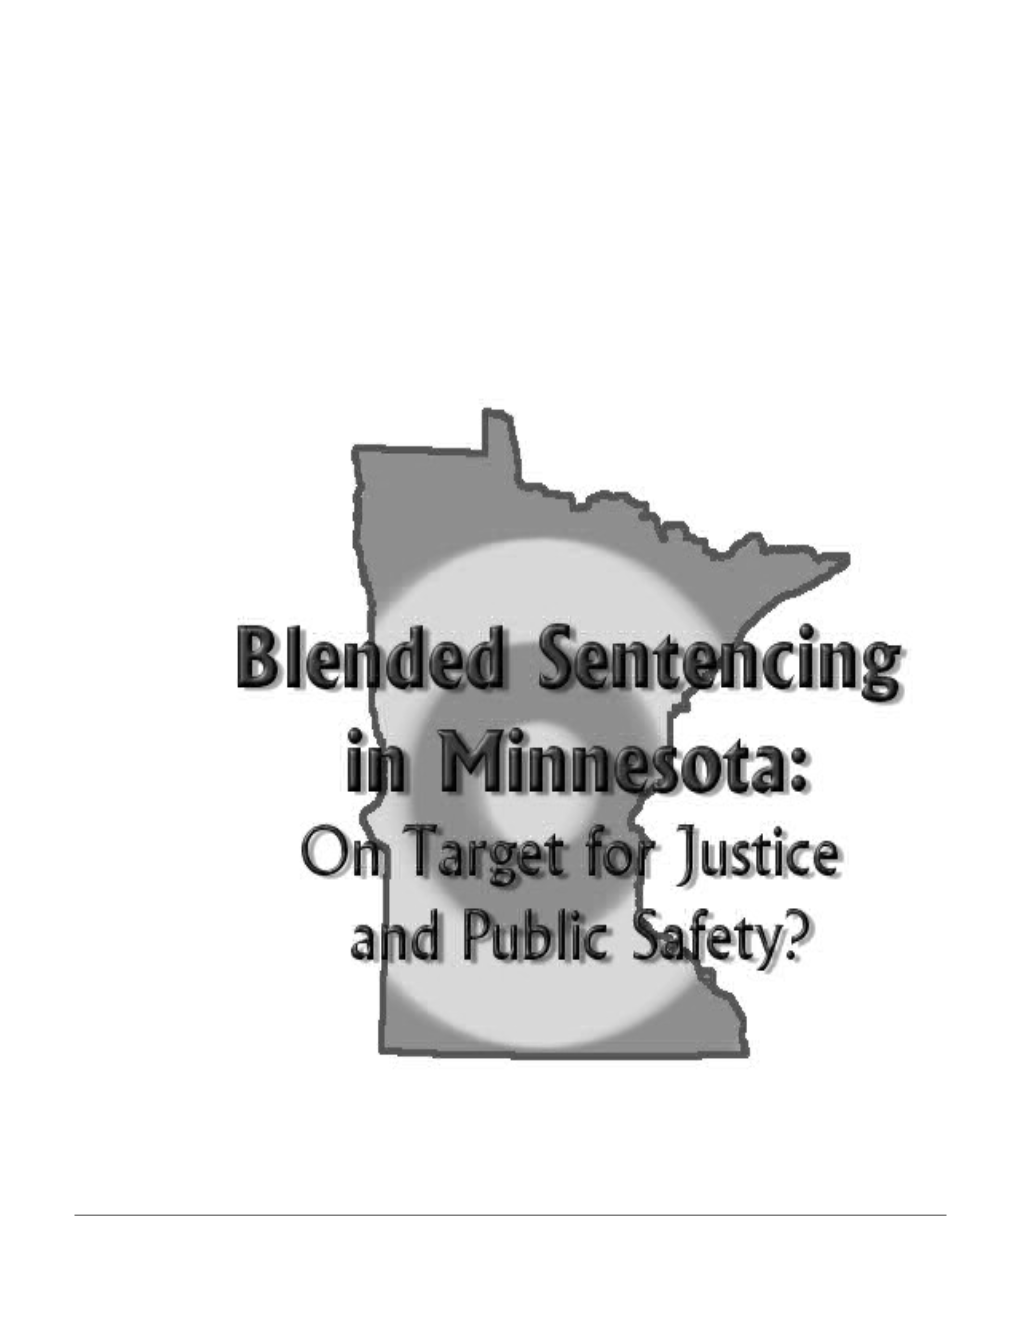 In 1994, the Minnesota Legislature Passed Sweeping Reform Legislation That Changed The